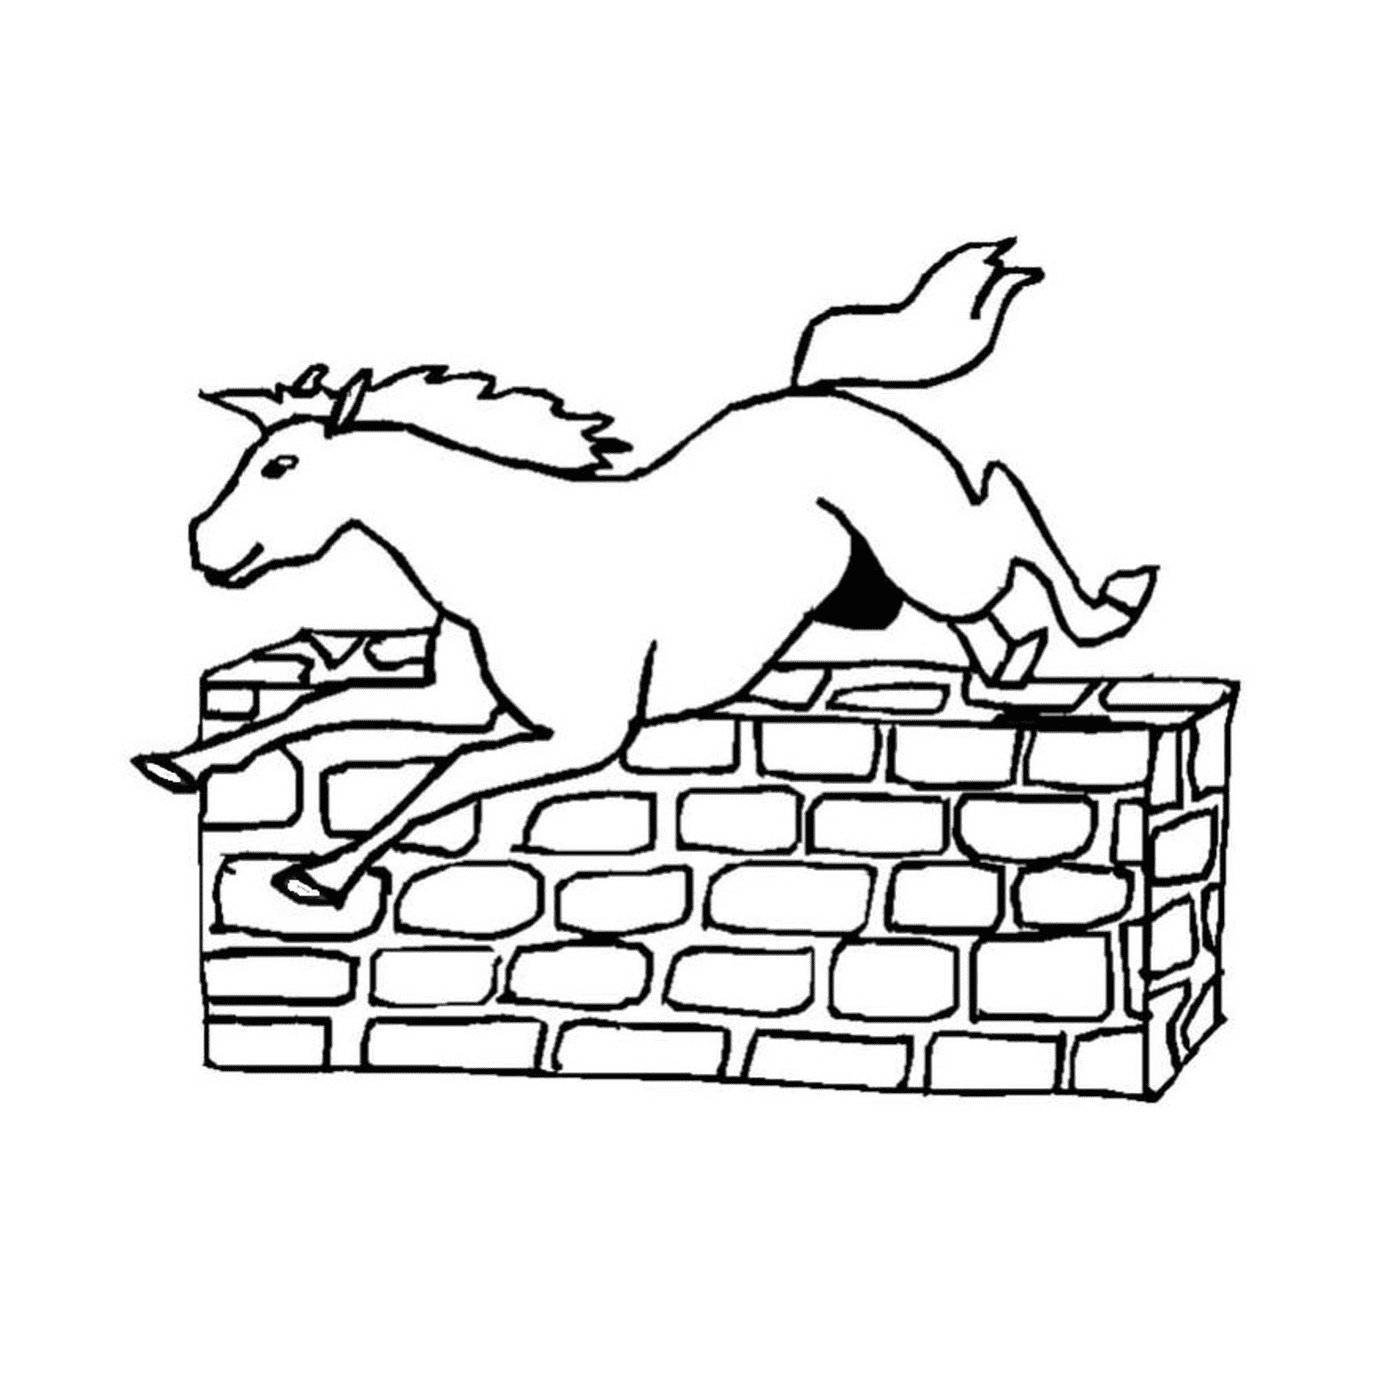  Audaz saltando caballo sobre una pared 